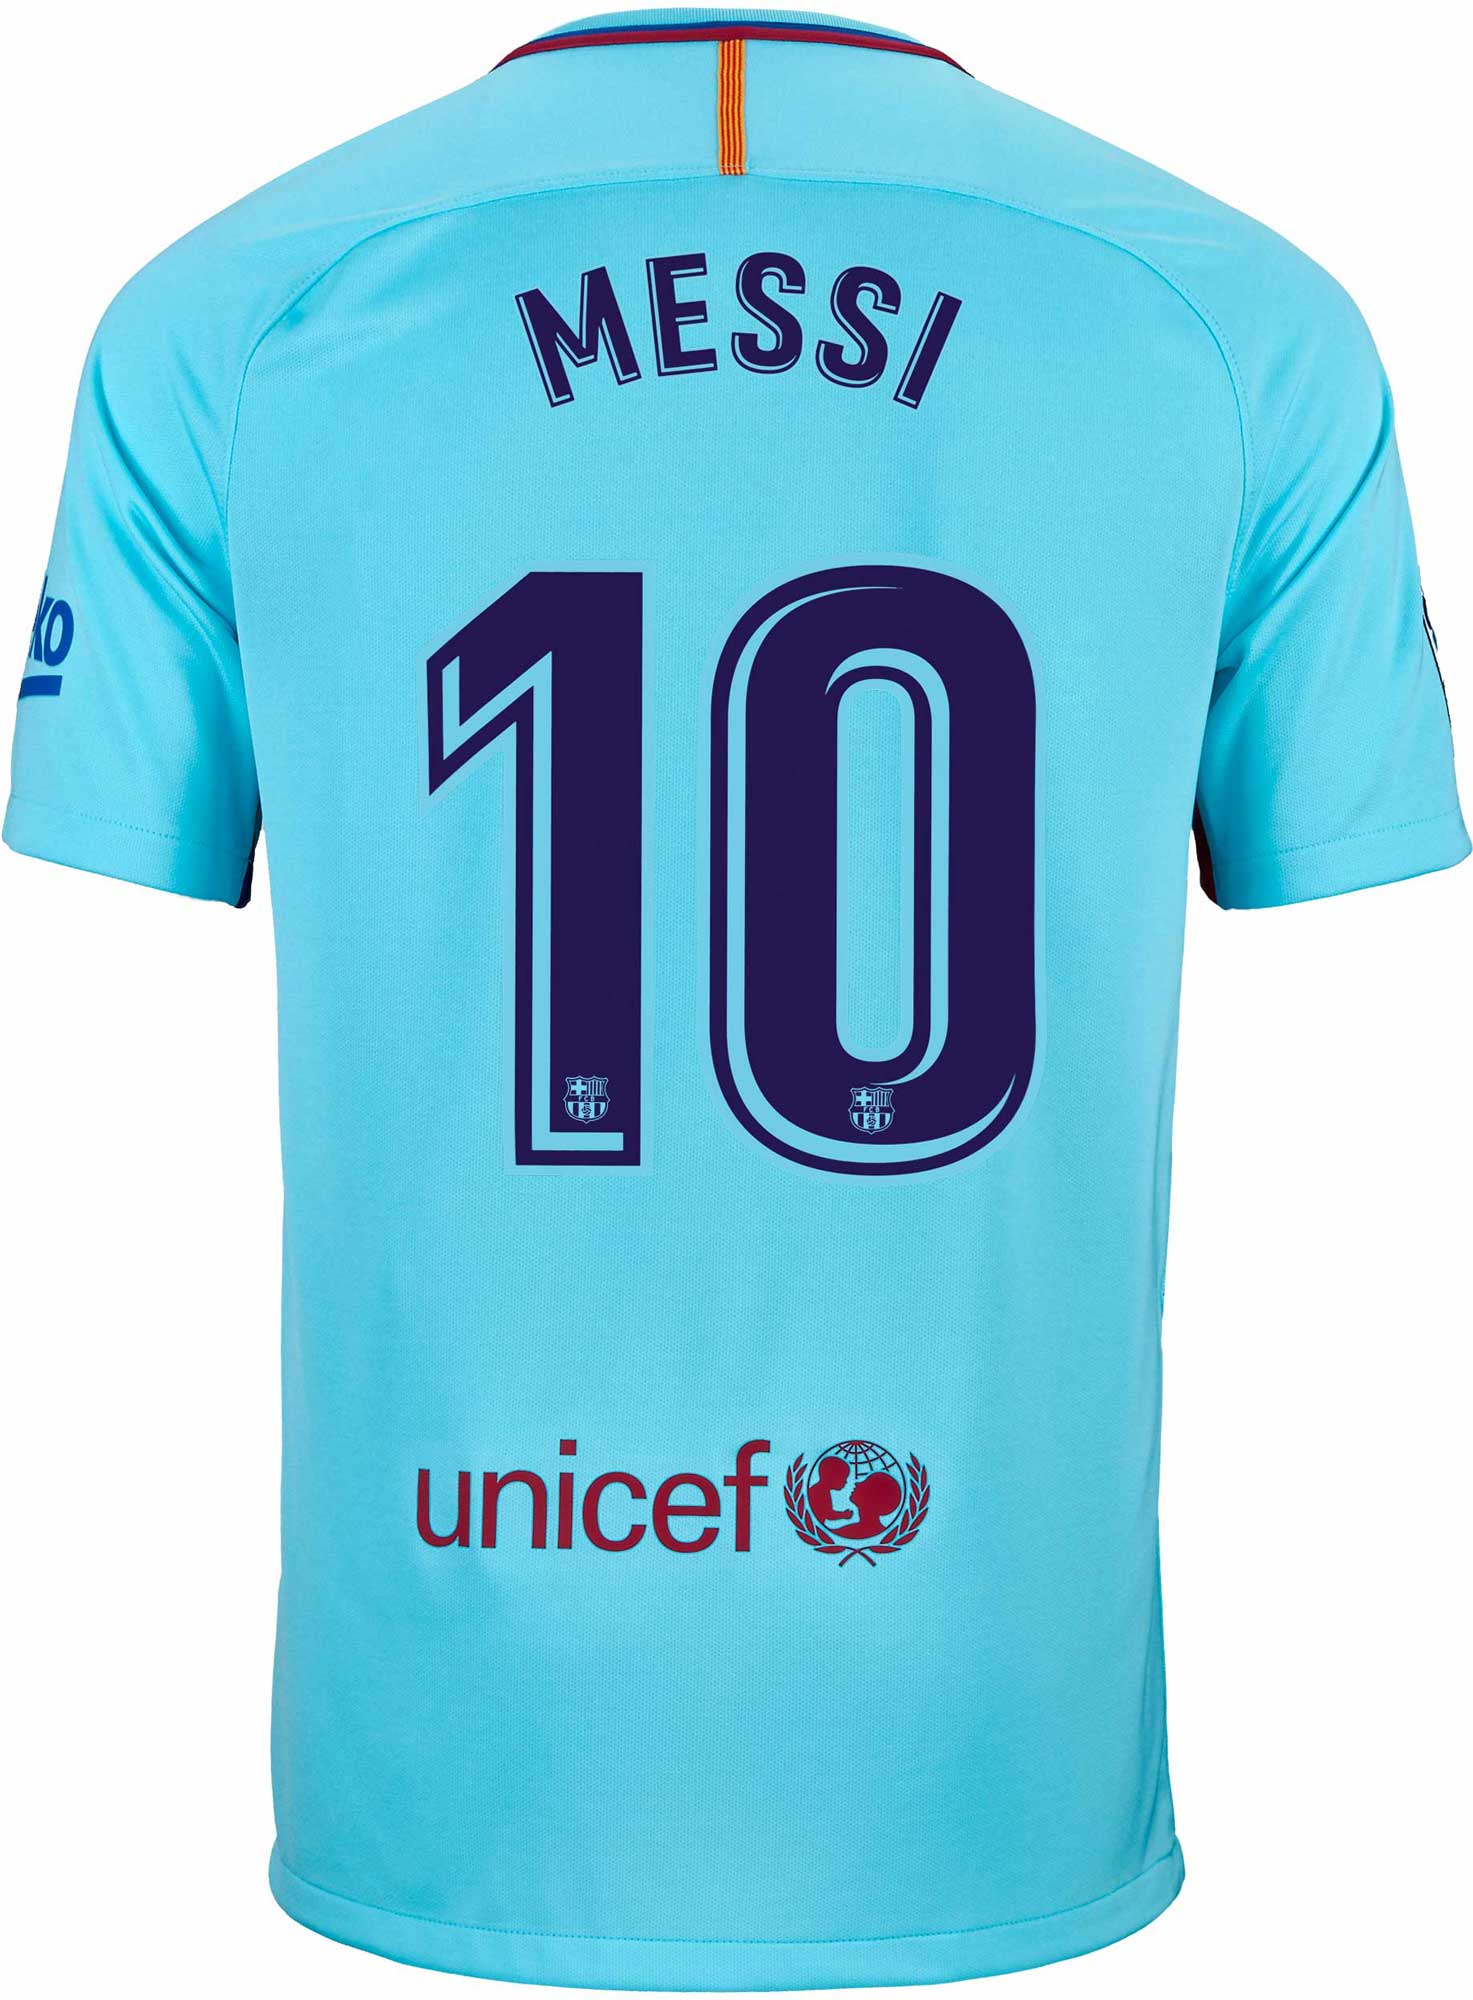 847386 484mes Nike Lionel Messi Barca Away Jsy Y 01 